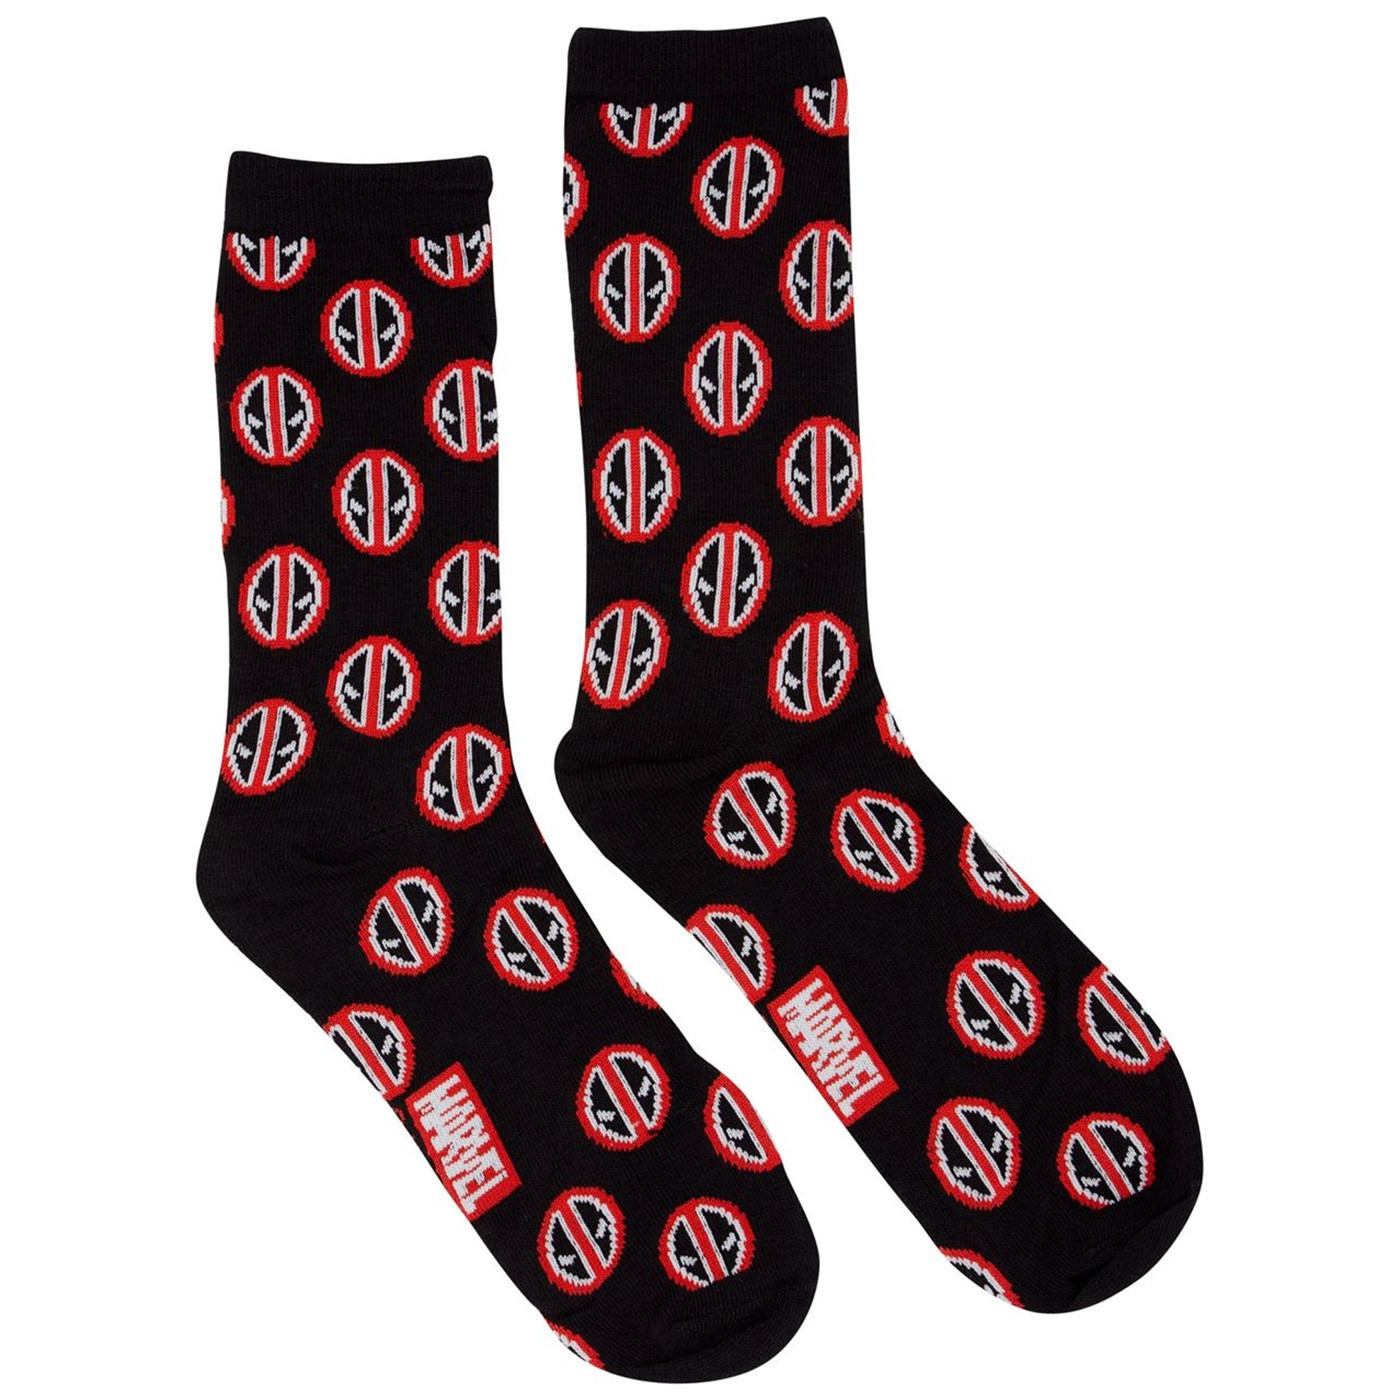 Deadpool Costume and Symbols Men's 2-Pack Crew Socks